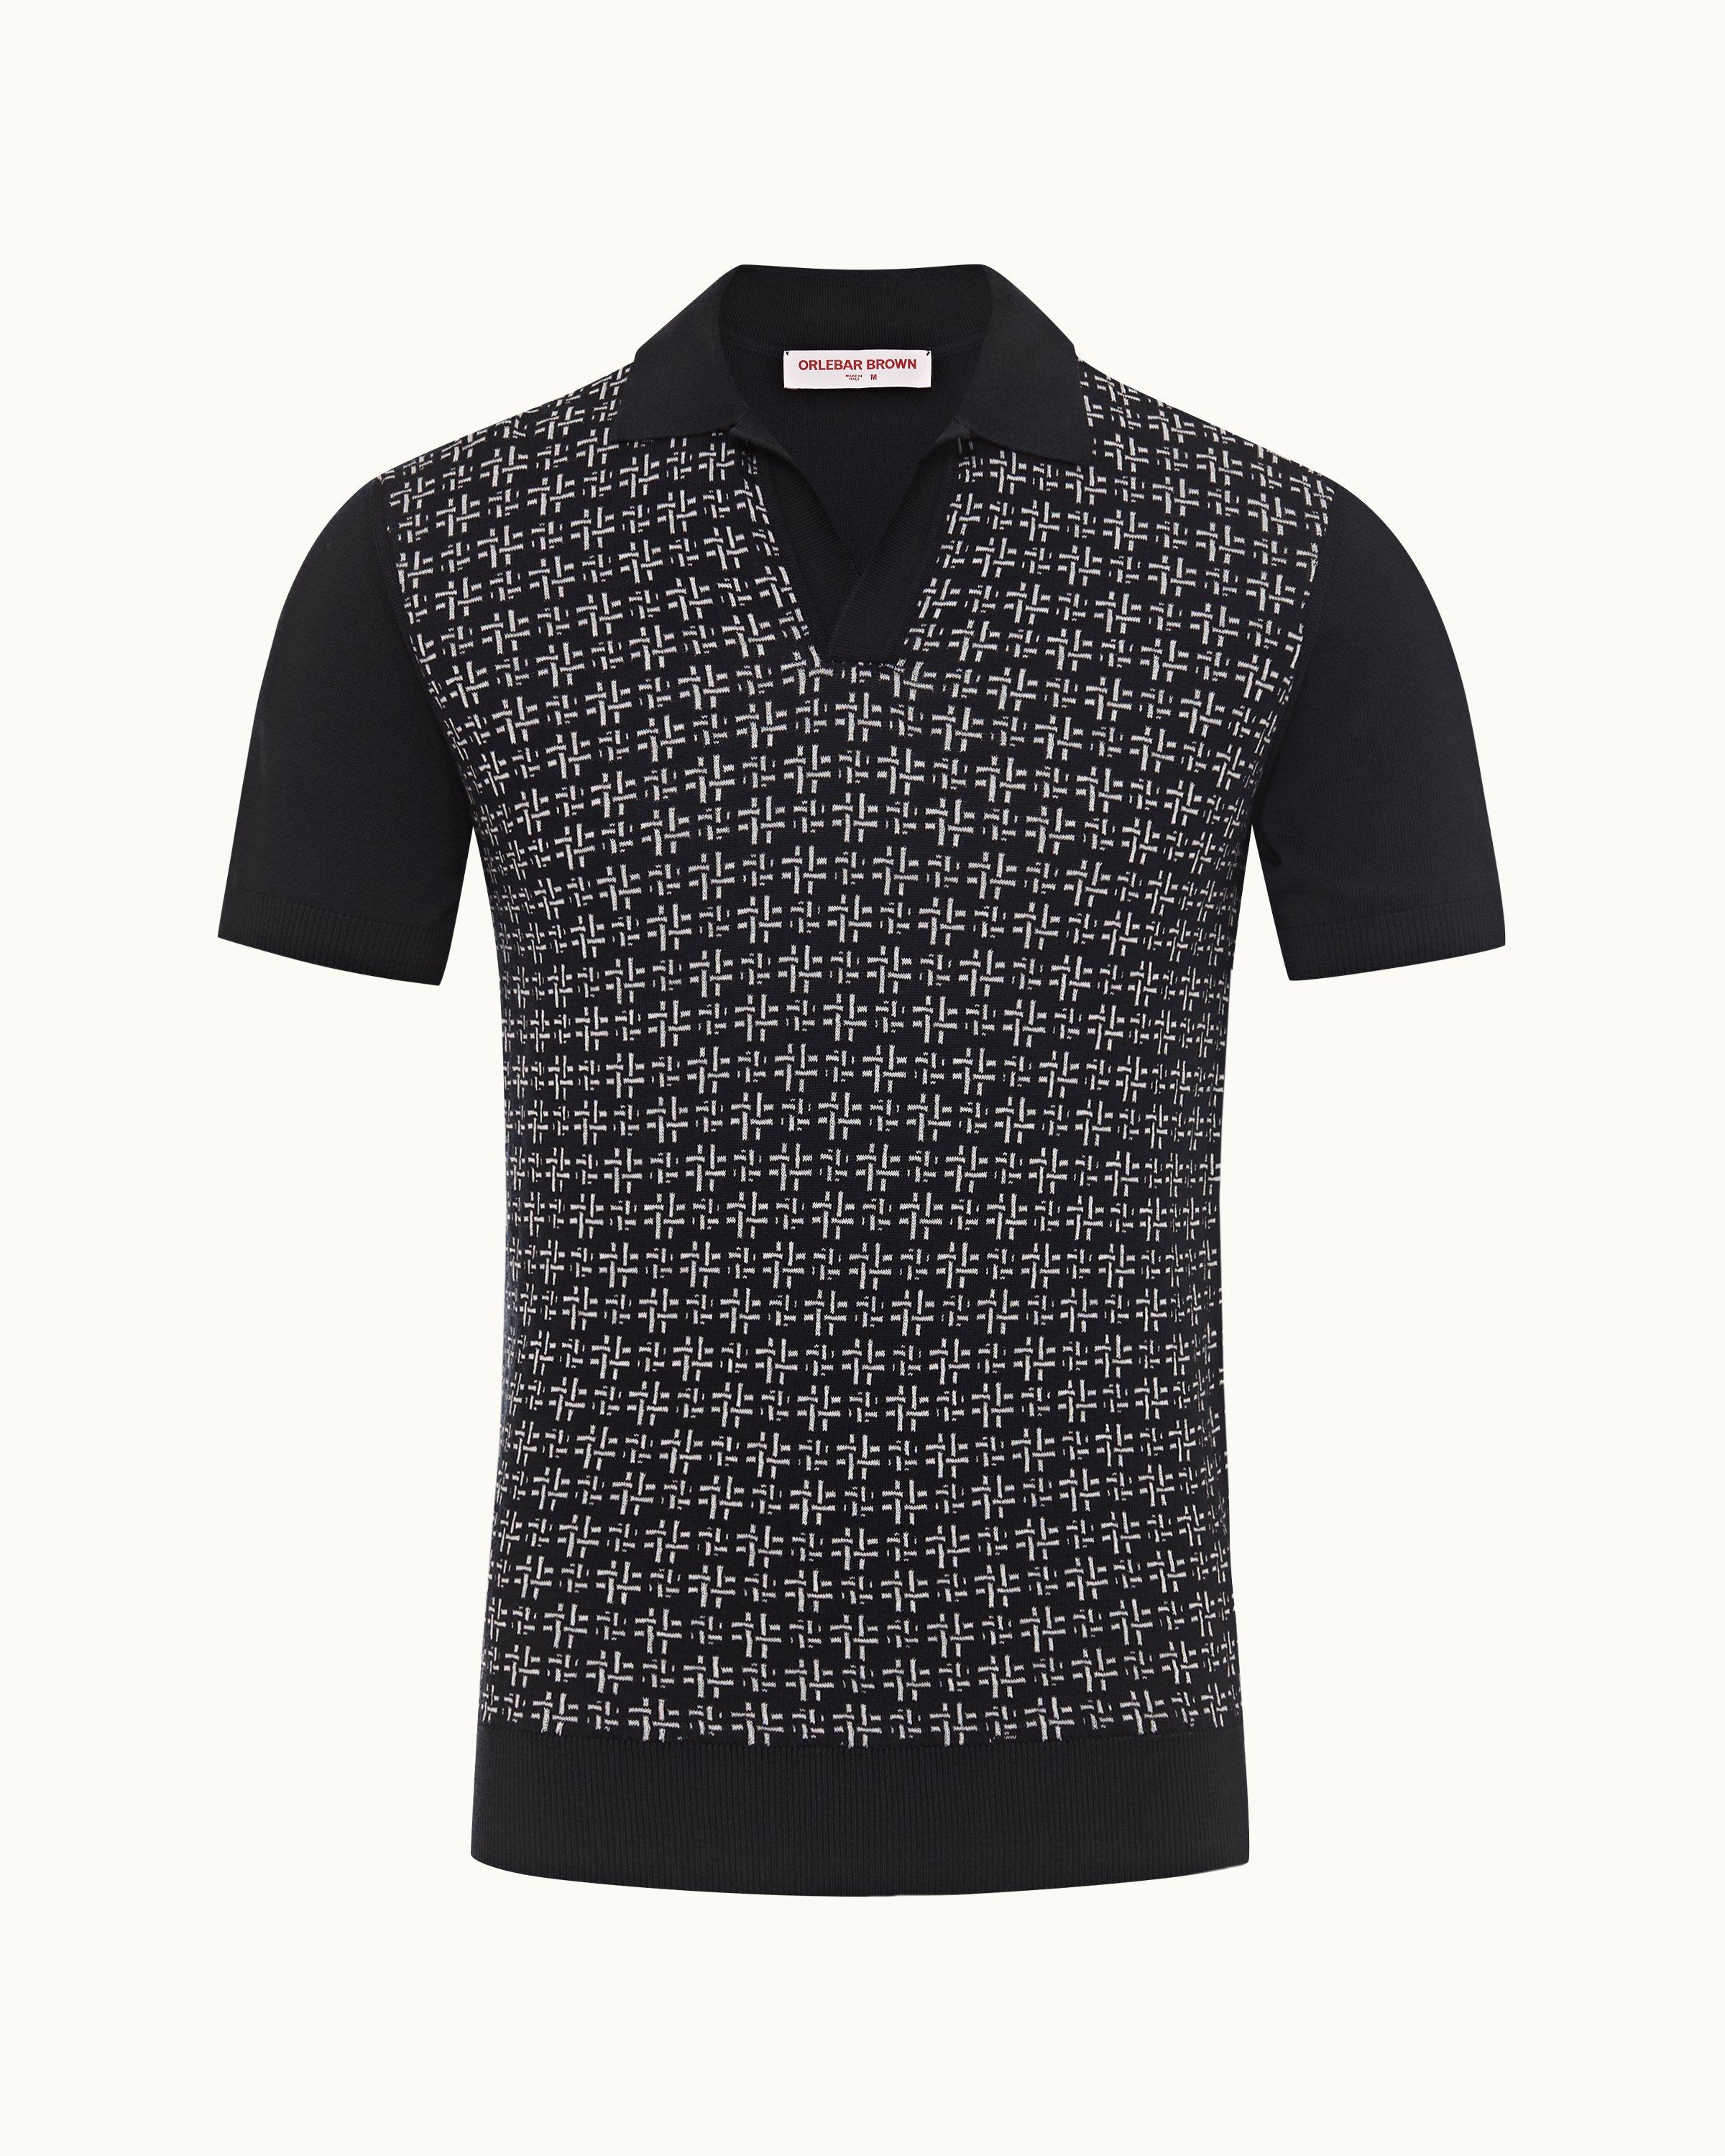 Louis Vuitton Men's Cotton Black and White Geometric Shirt